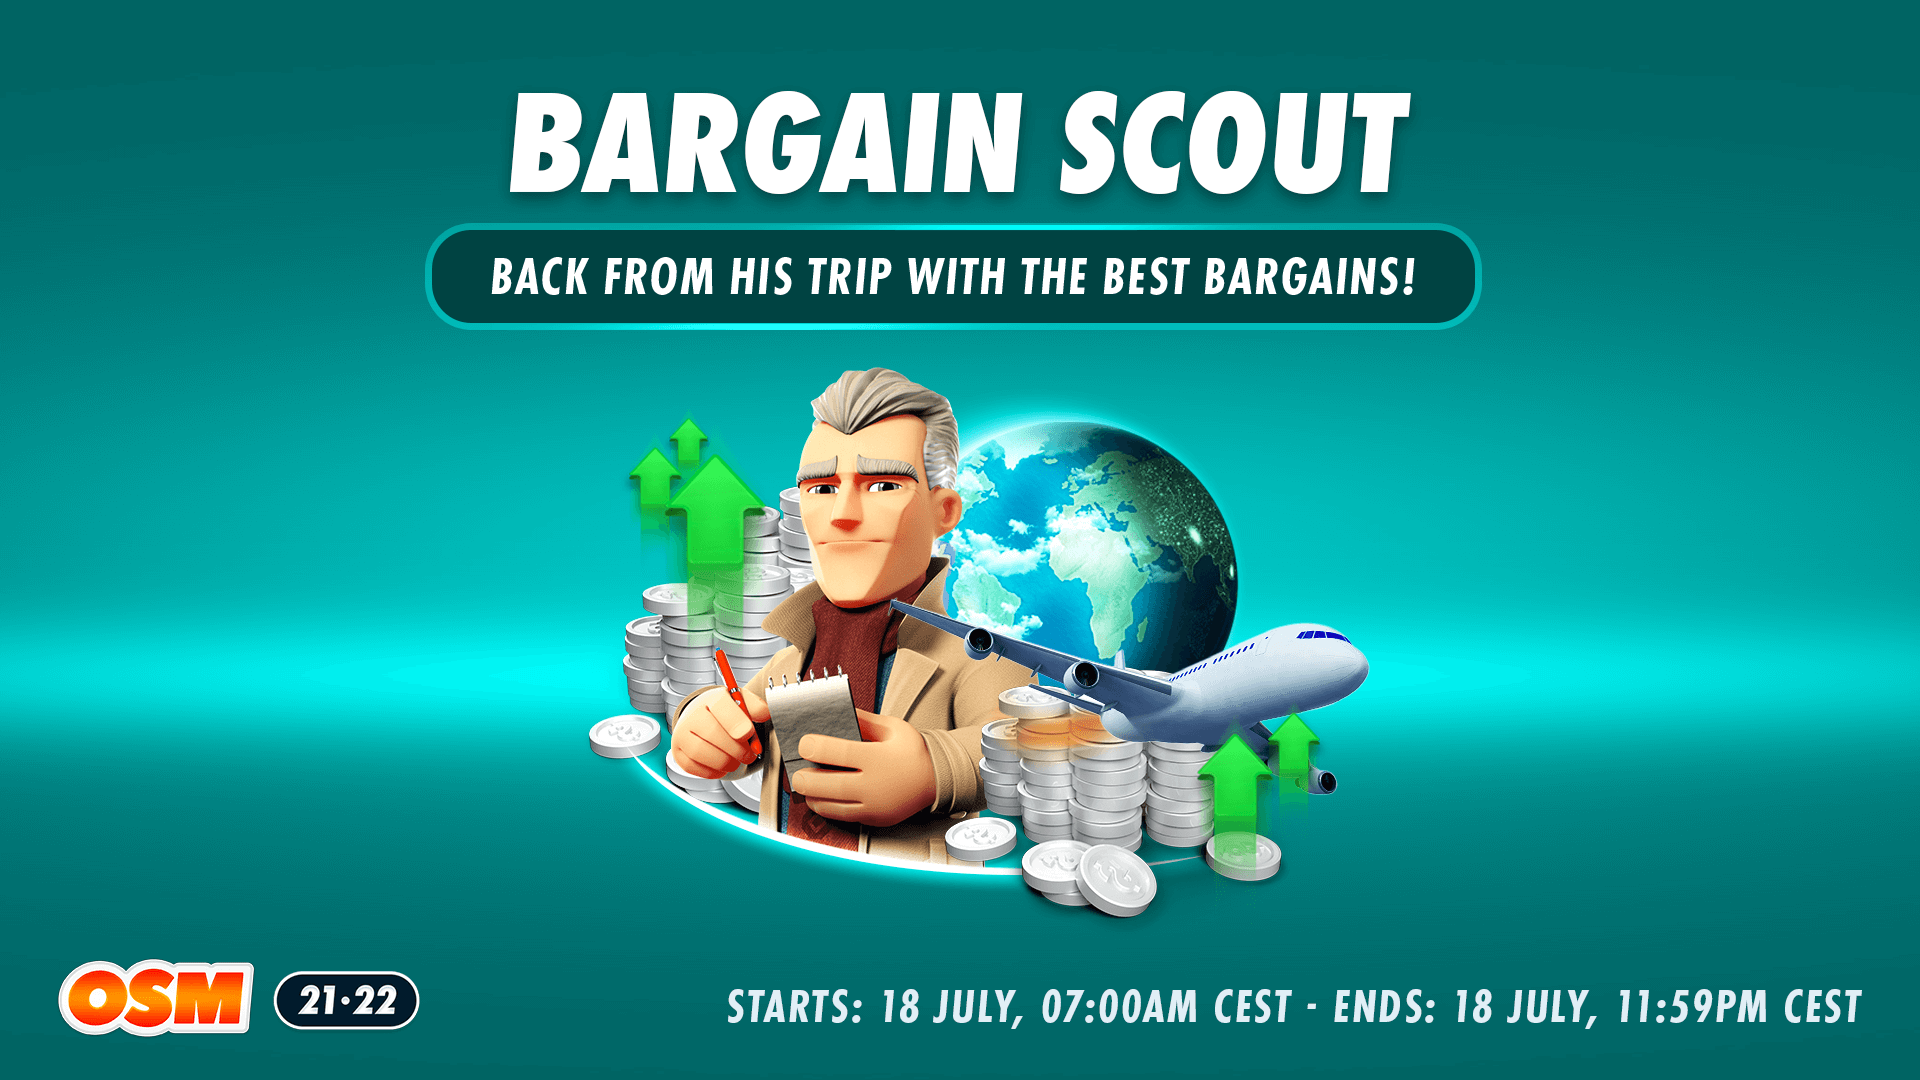 Forum_Bargain Scout_REDDIT (1).png